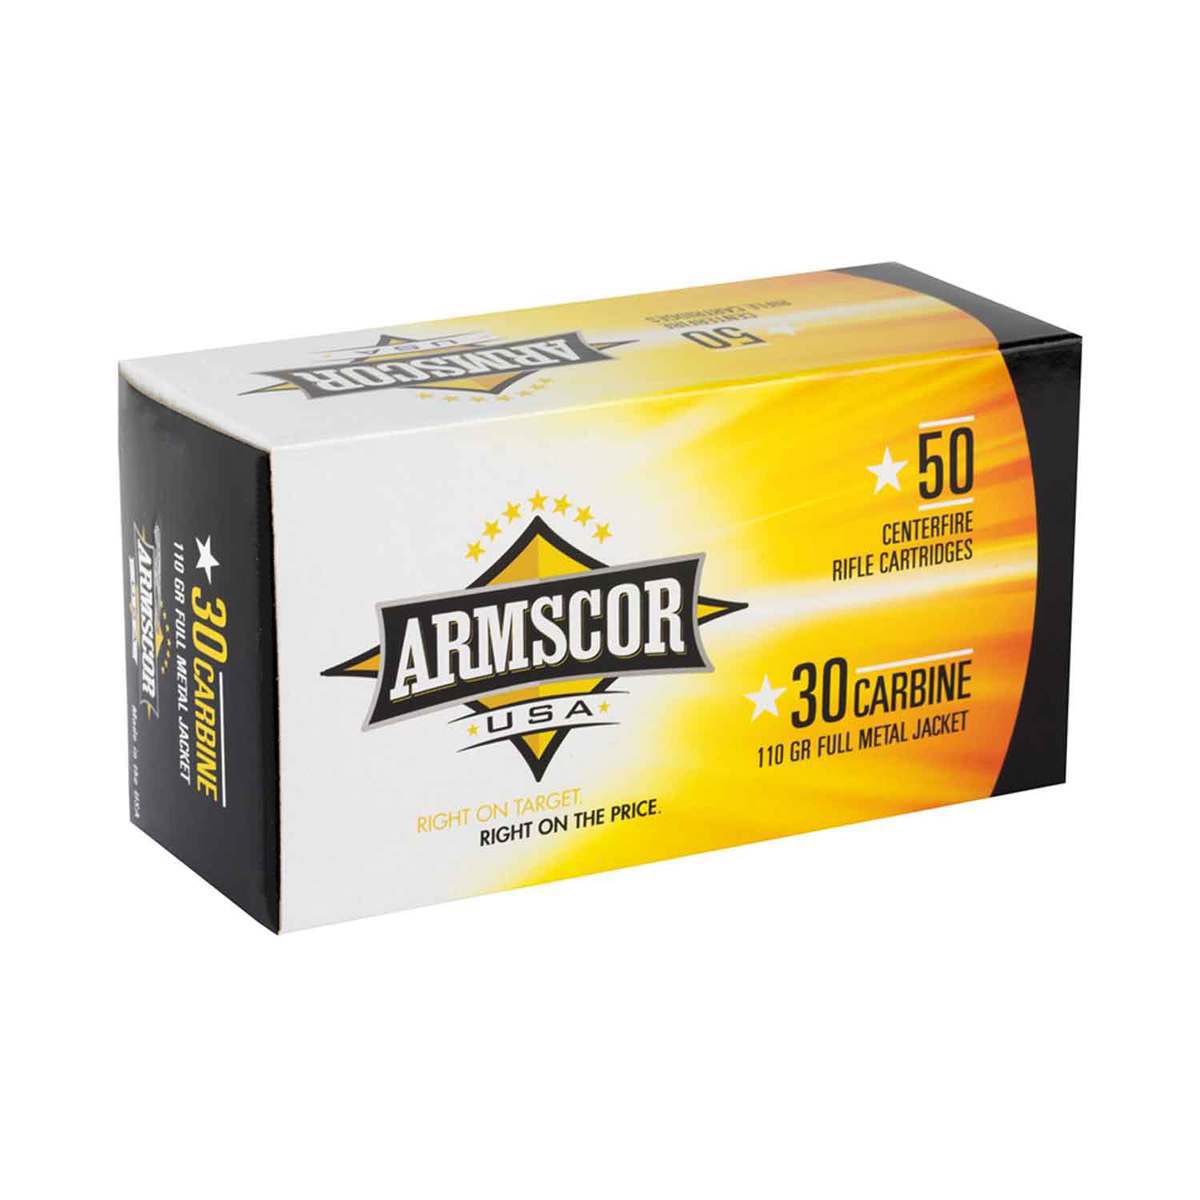 Armscor 30 Carbine 110gr Fmj Rifle Ammo 50 Rounds Sportsmans Warehouse 9457